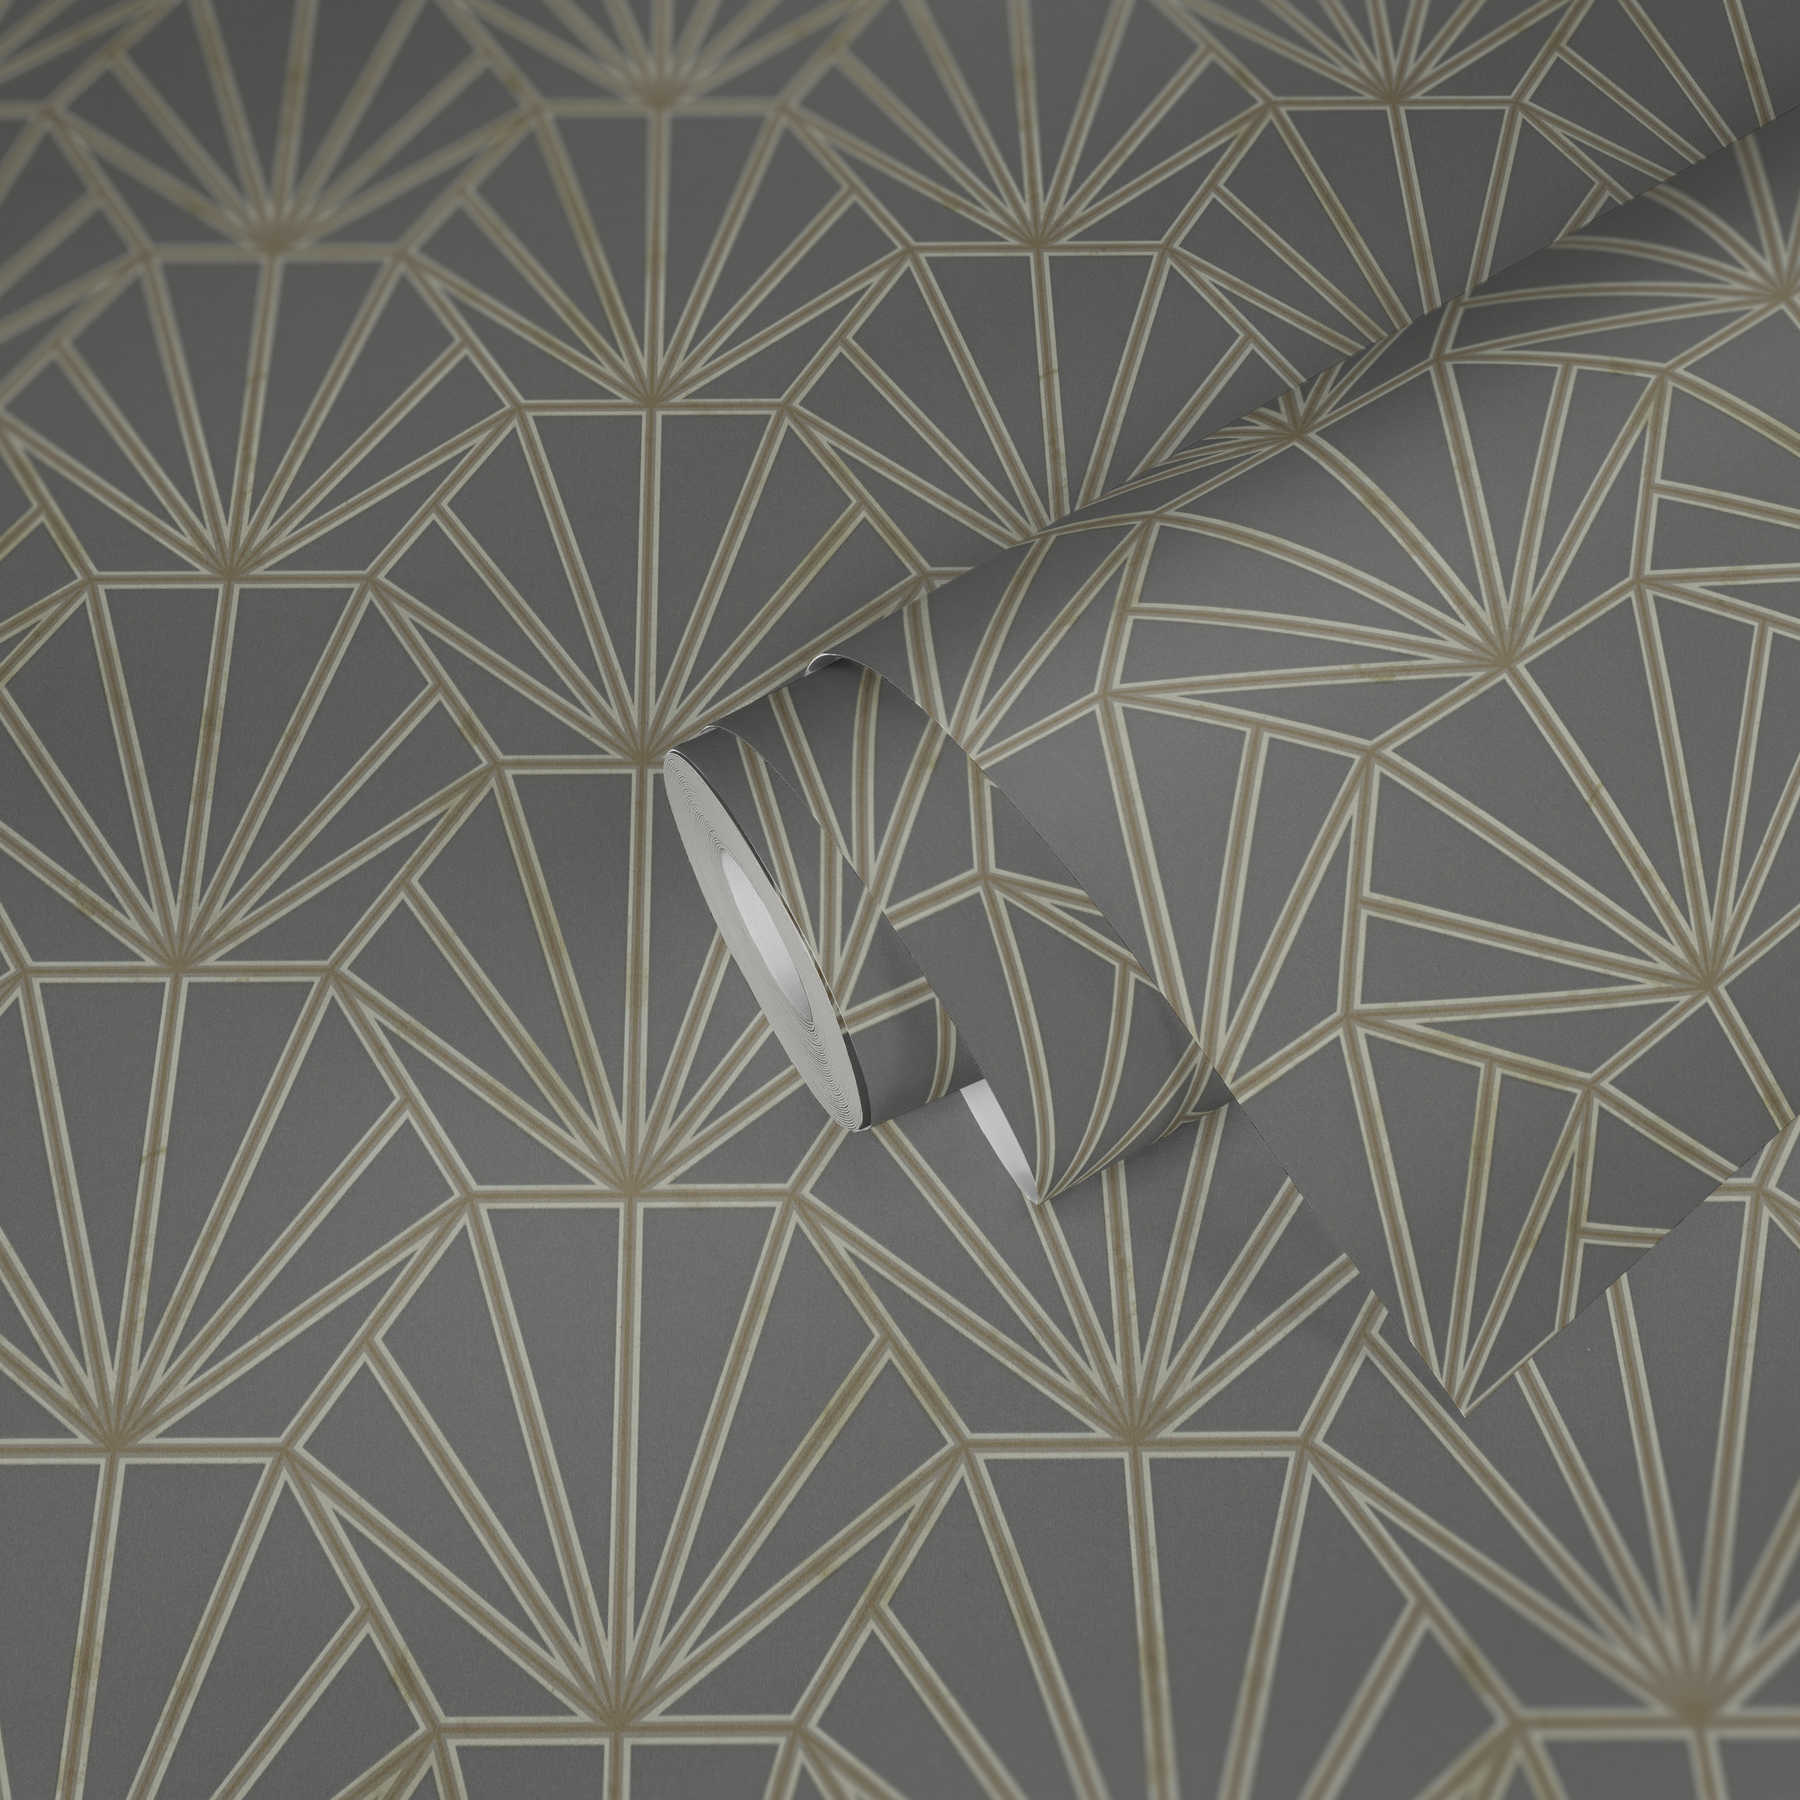             Wallpaper art deco pattern and line motif - grey, gold, white
        